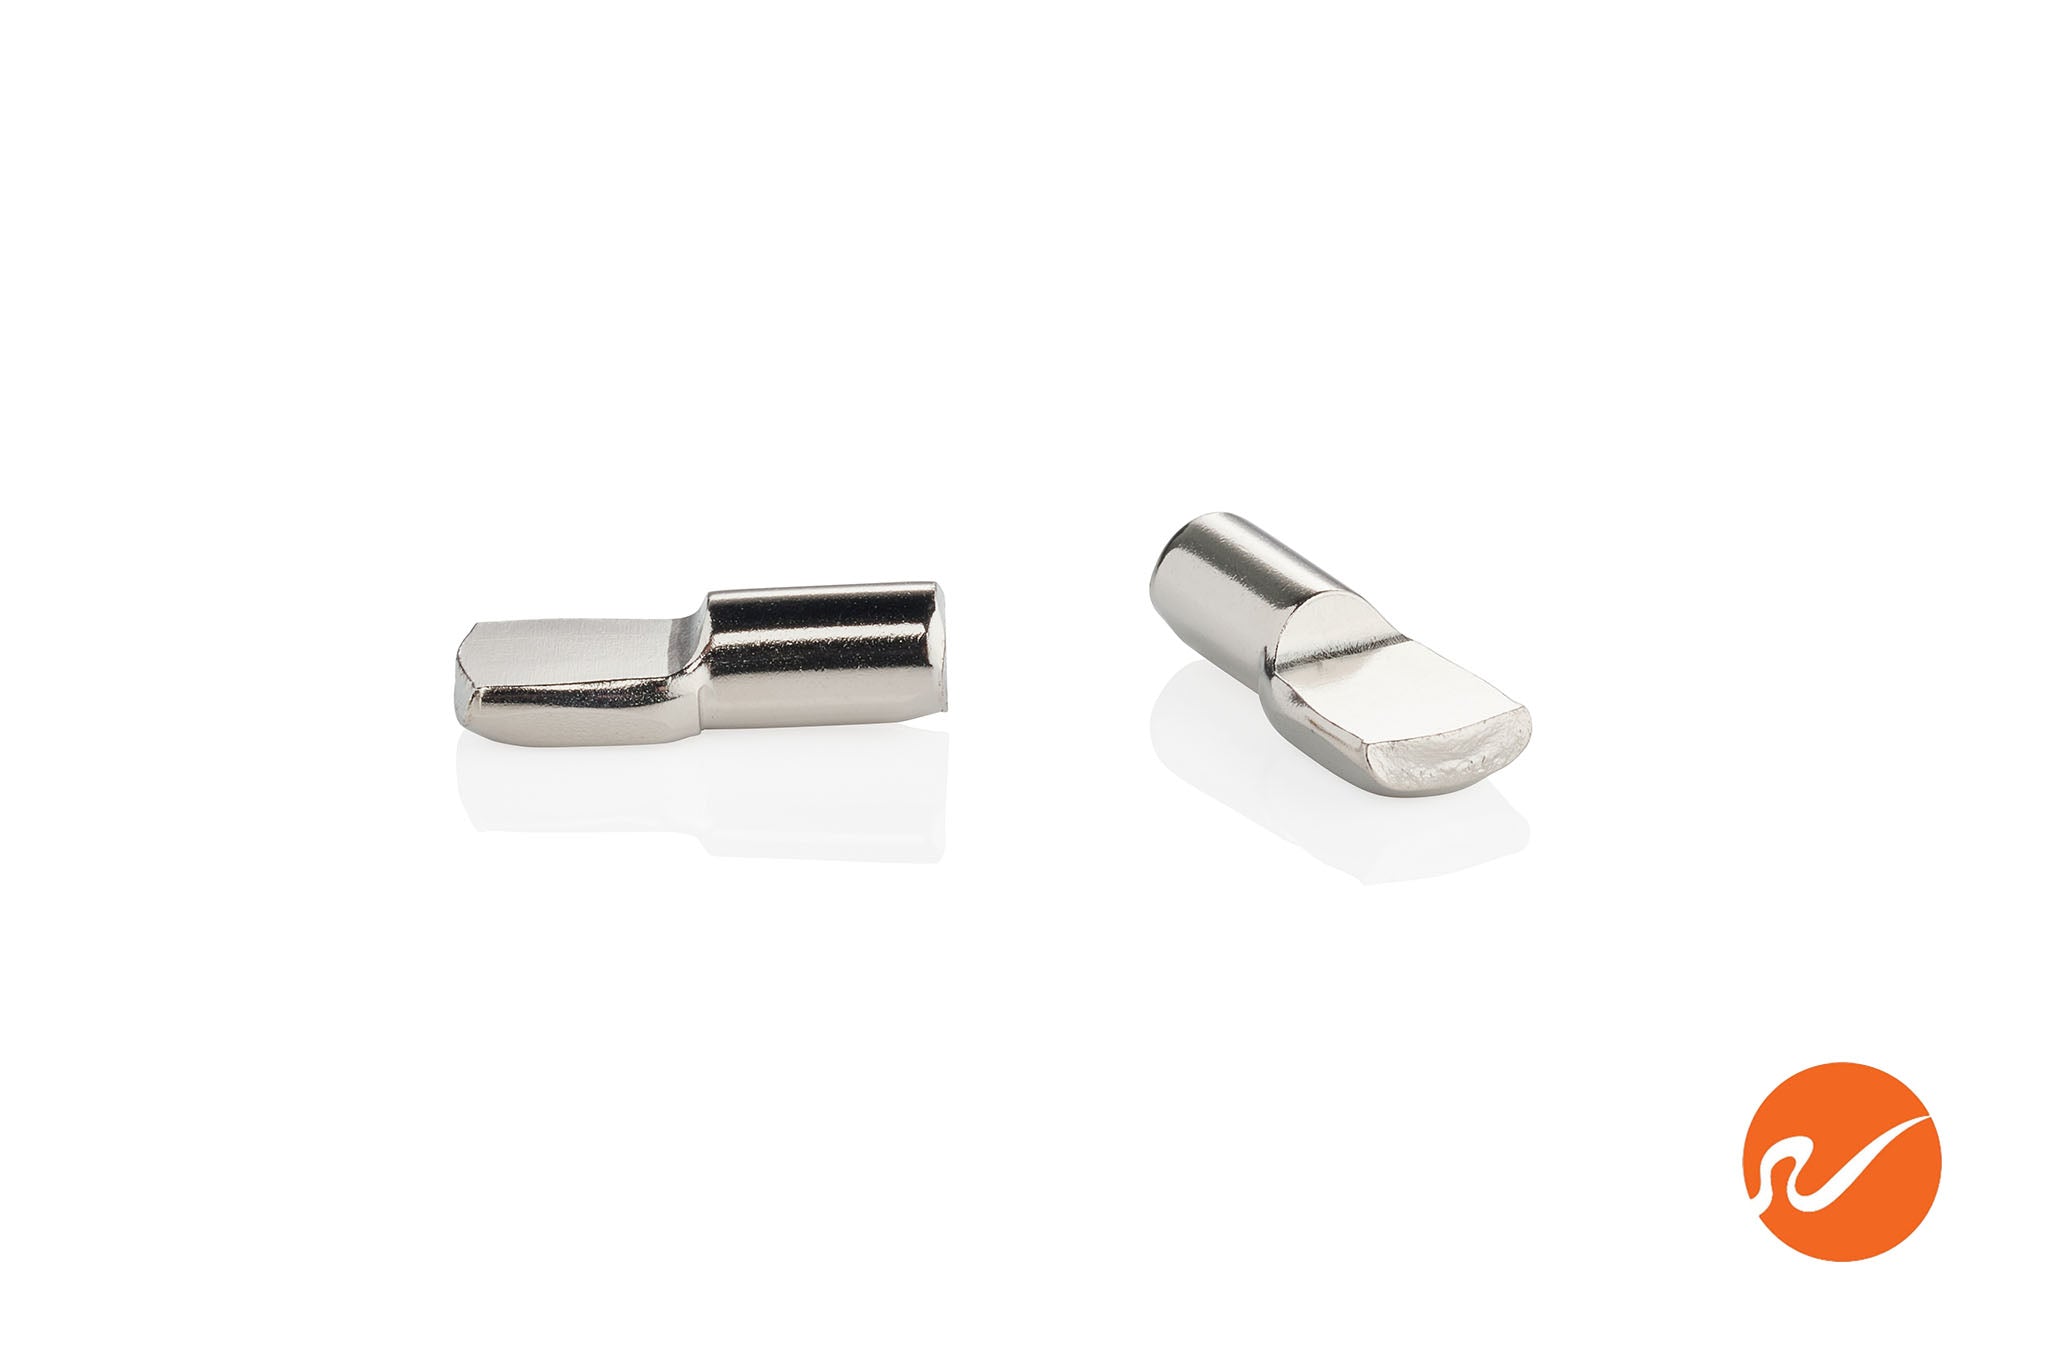 Swpeet 120Pcs 4 Styles Shelf Pins Kit, Top Quality Nickel Plated